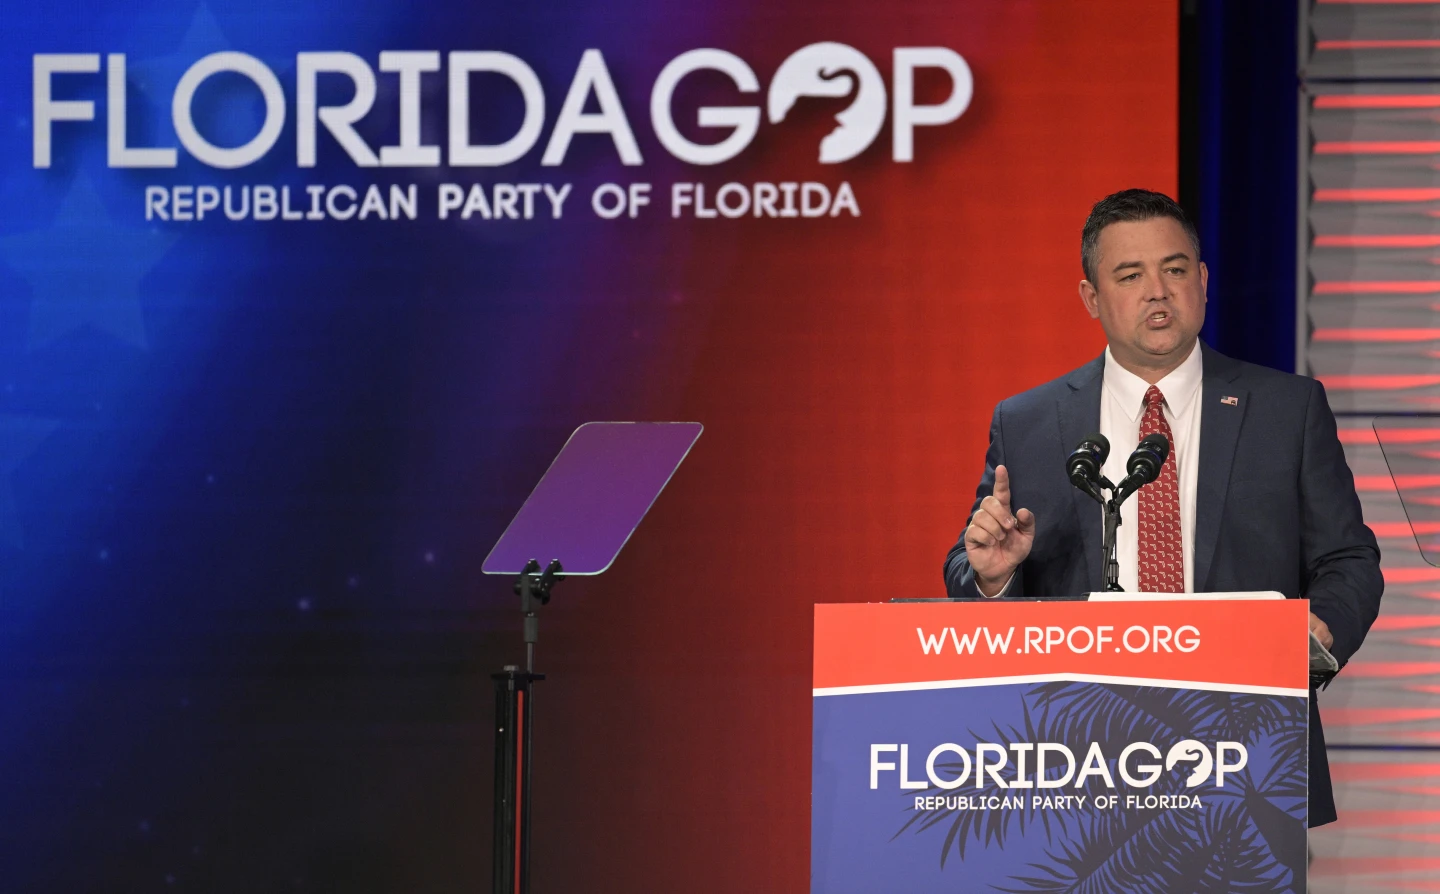 Florida Republicans vote on removing party chairman accused of rape as DeSantis pins hopes on Iowa (apnews.com)